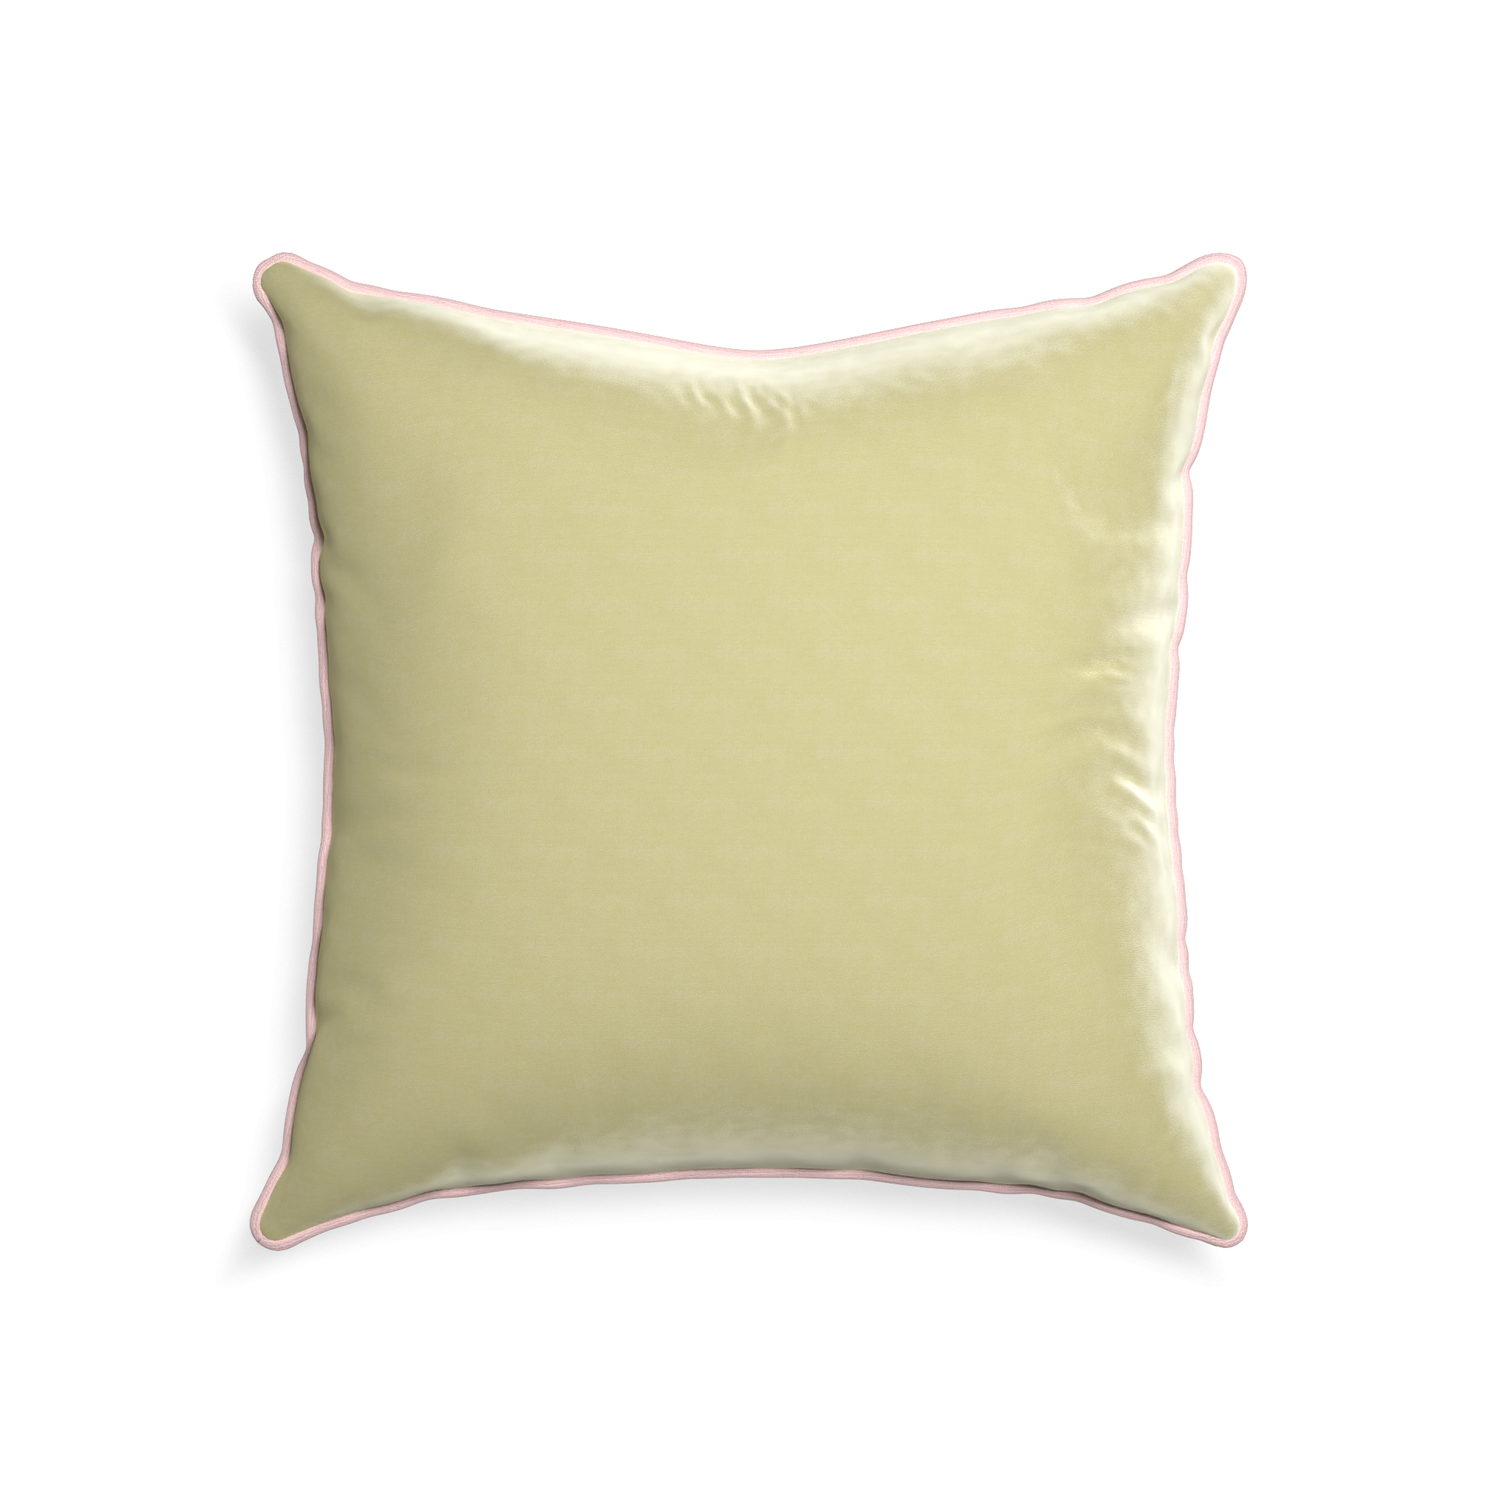 square light green velvet pillow with light pink piping